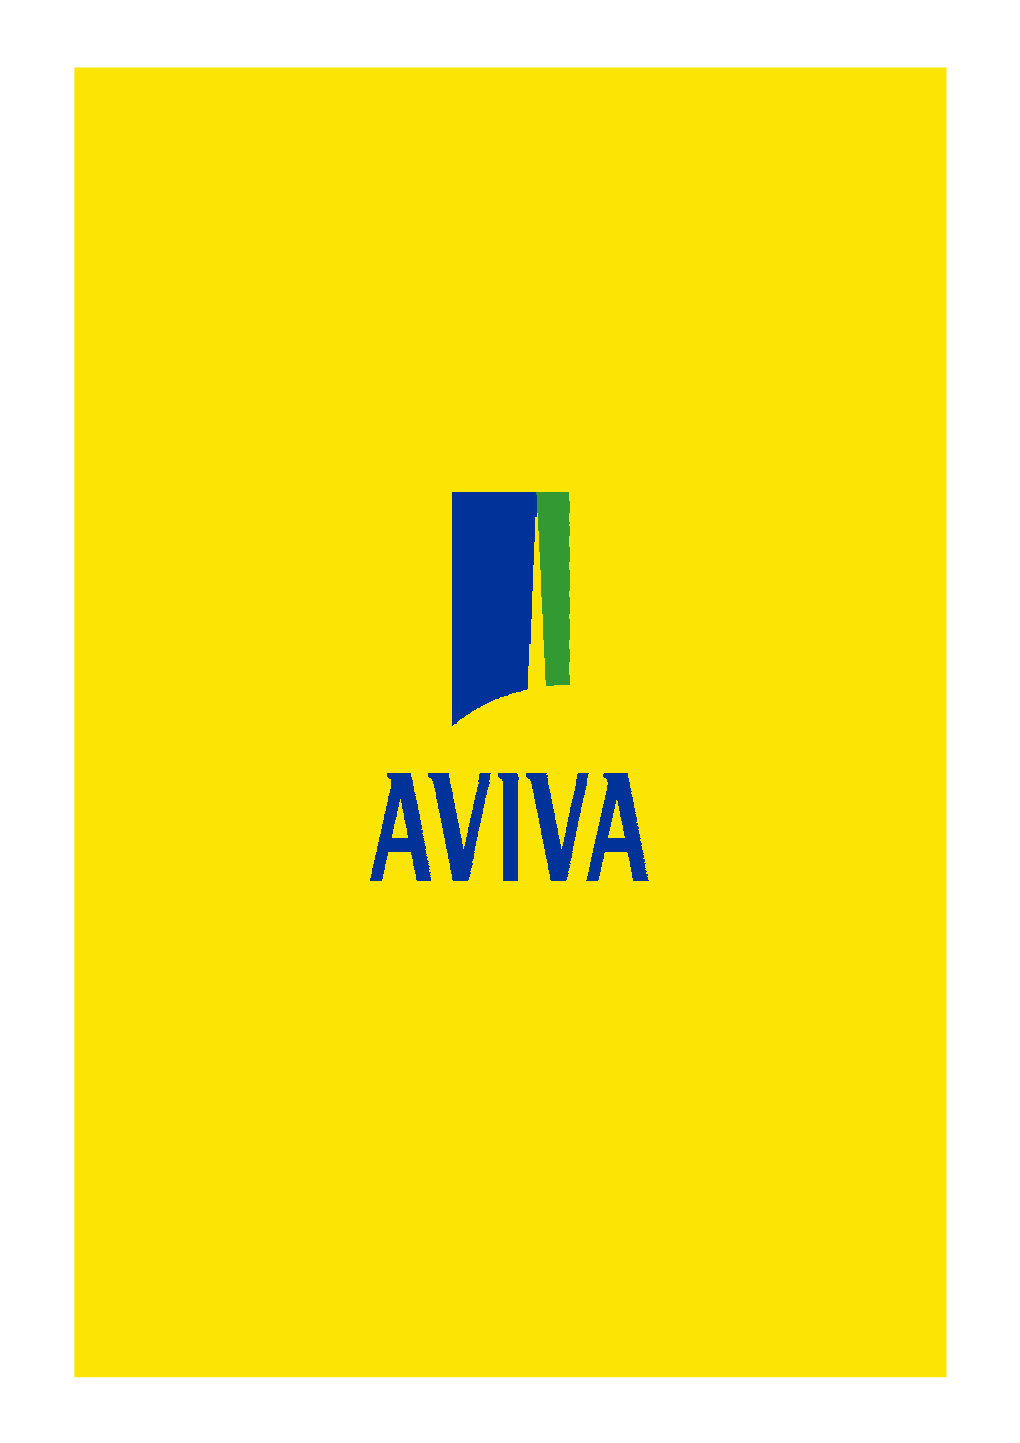 Aviva Life Insurance